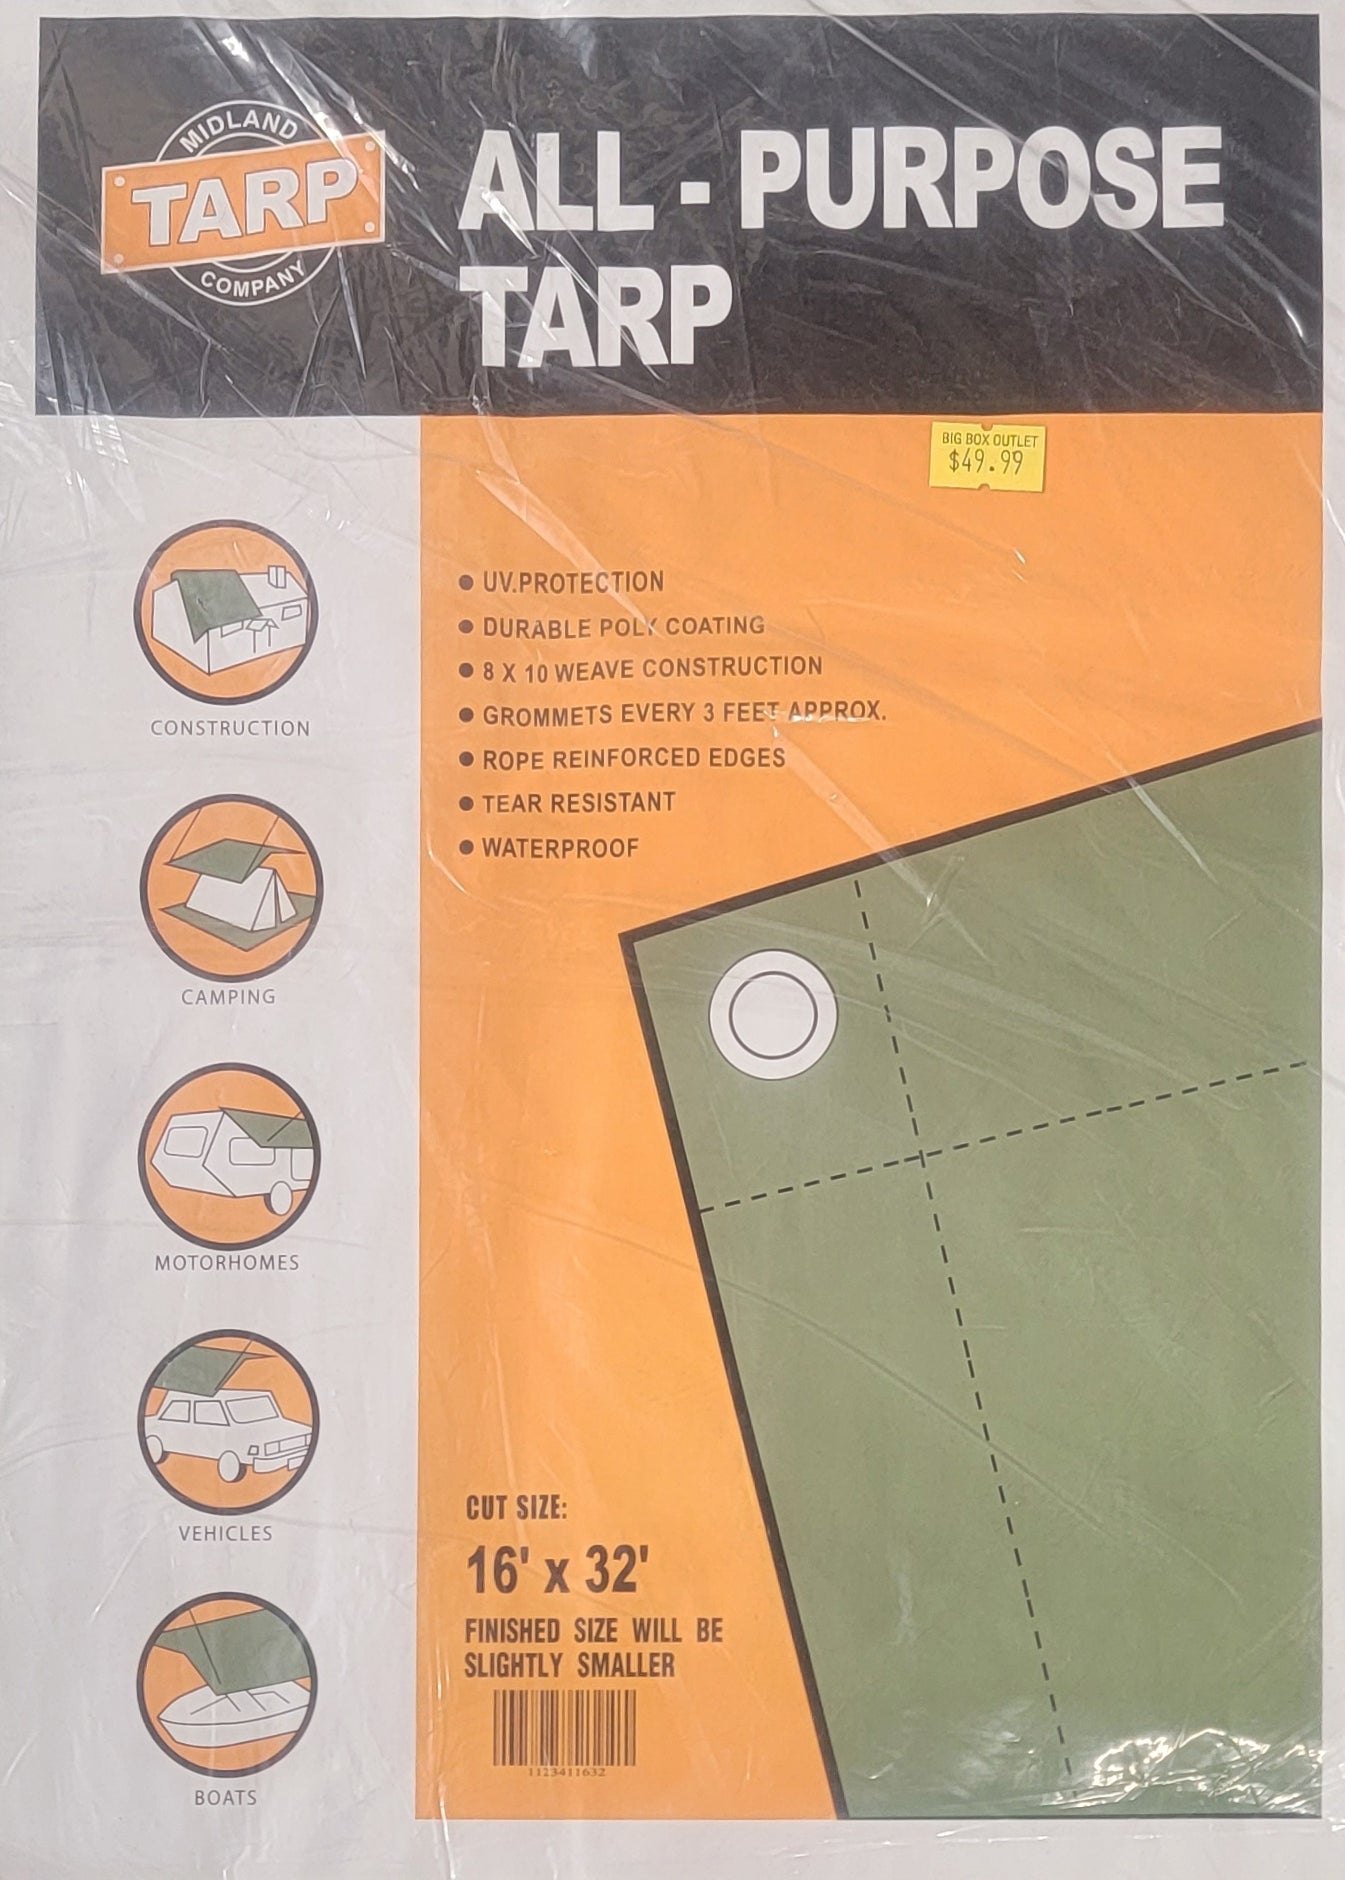 Midland Tarps - All Purpose Green Tarp - 16' x 32'